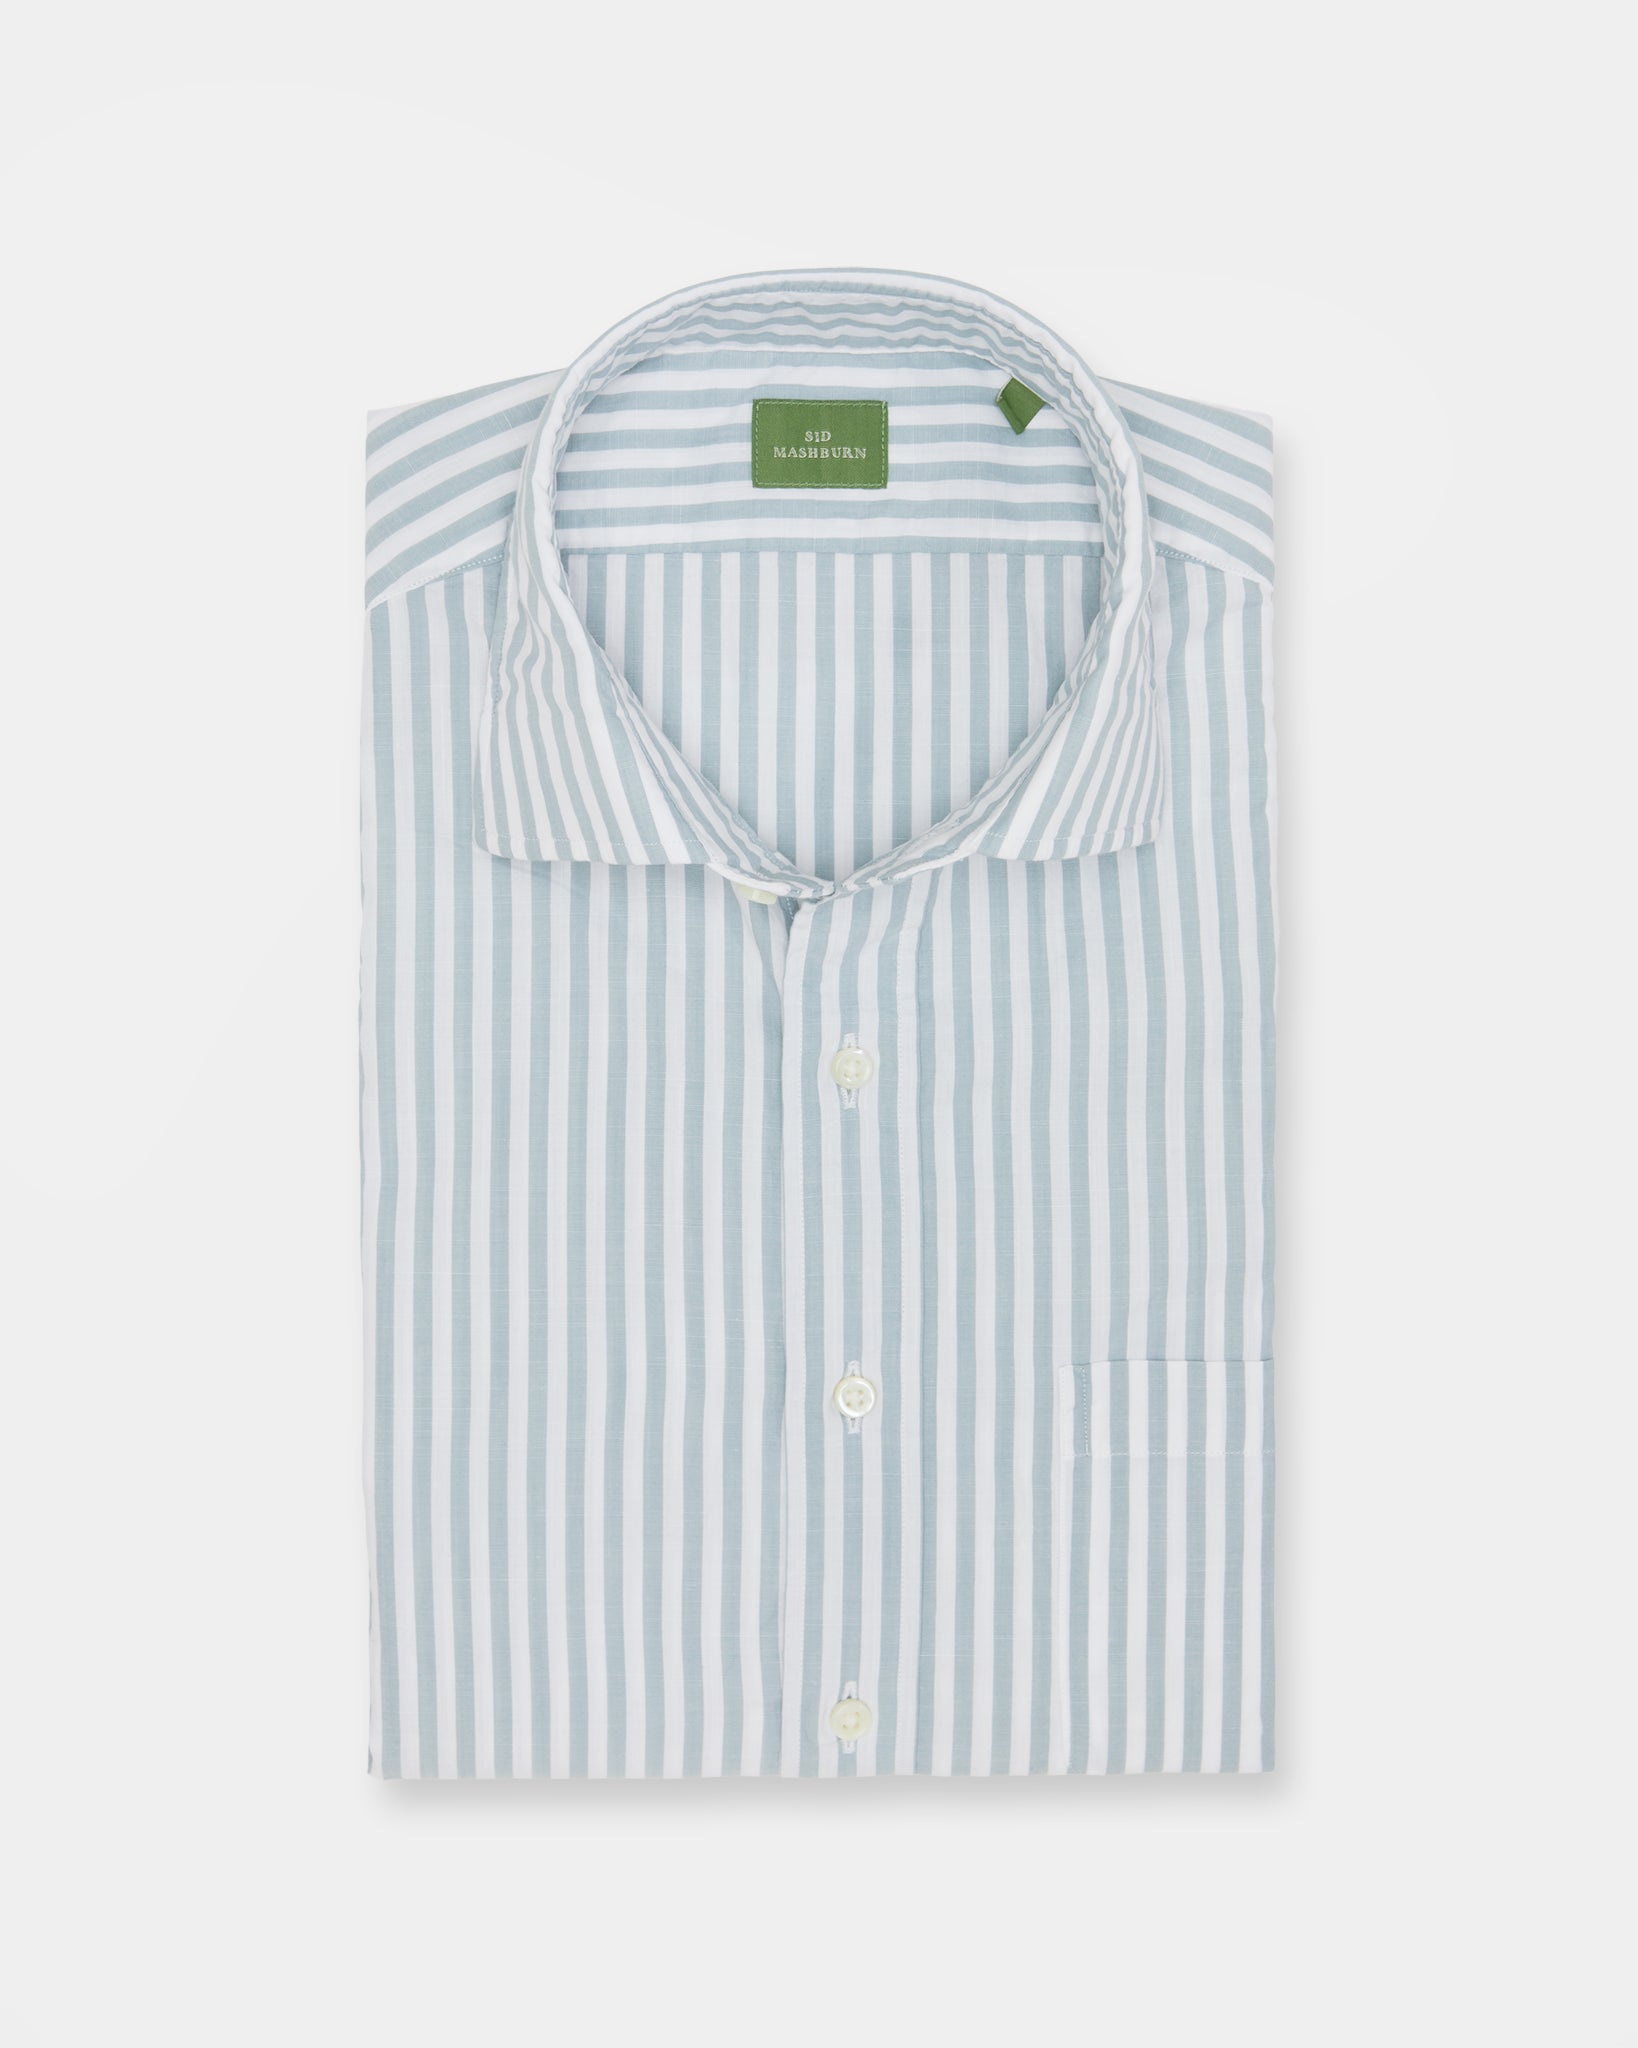 Spread Collar Sport Shirt in Seaglass Stripe Chambray